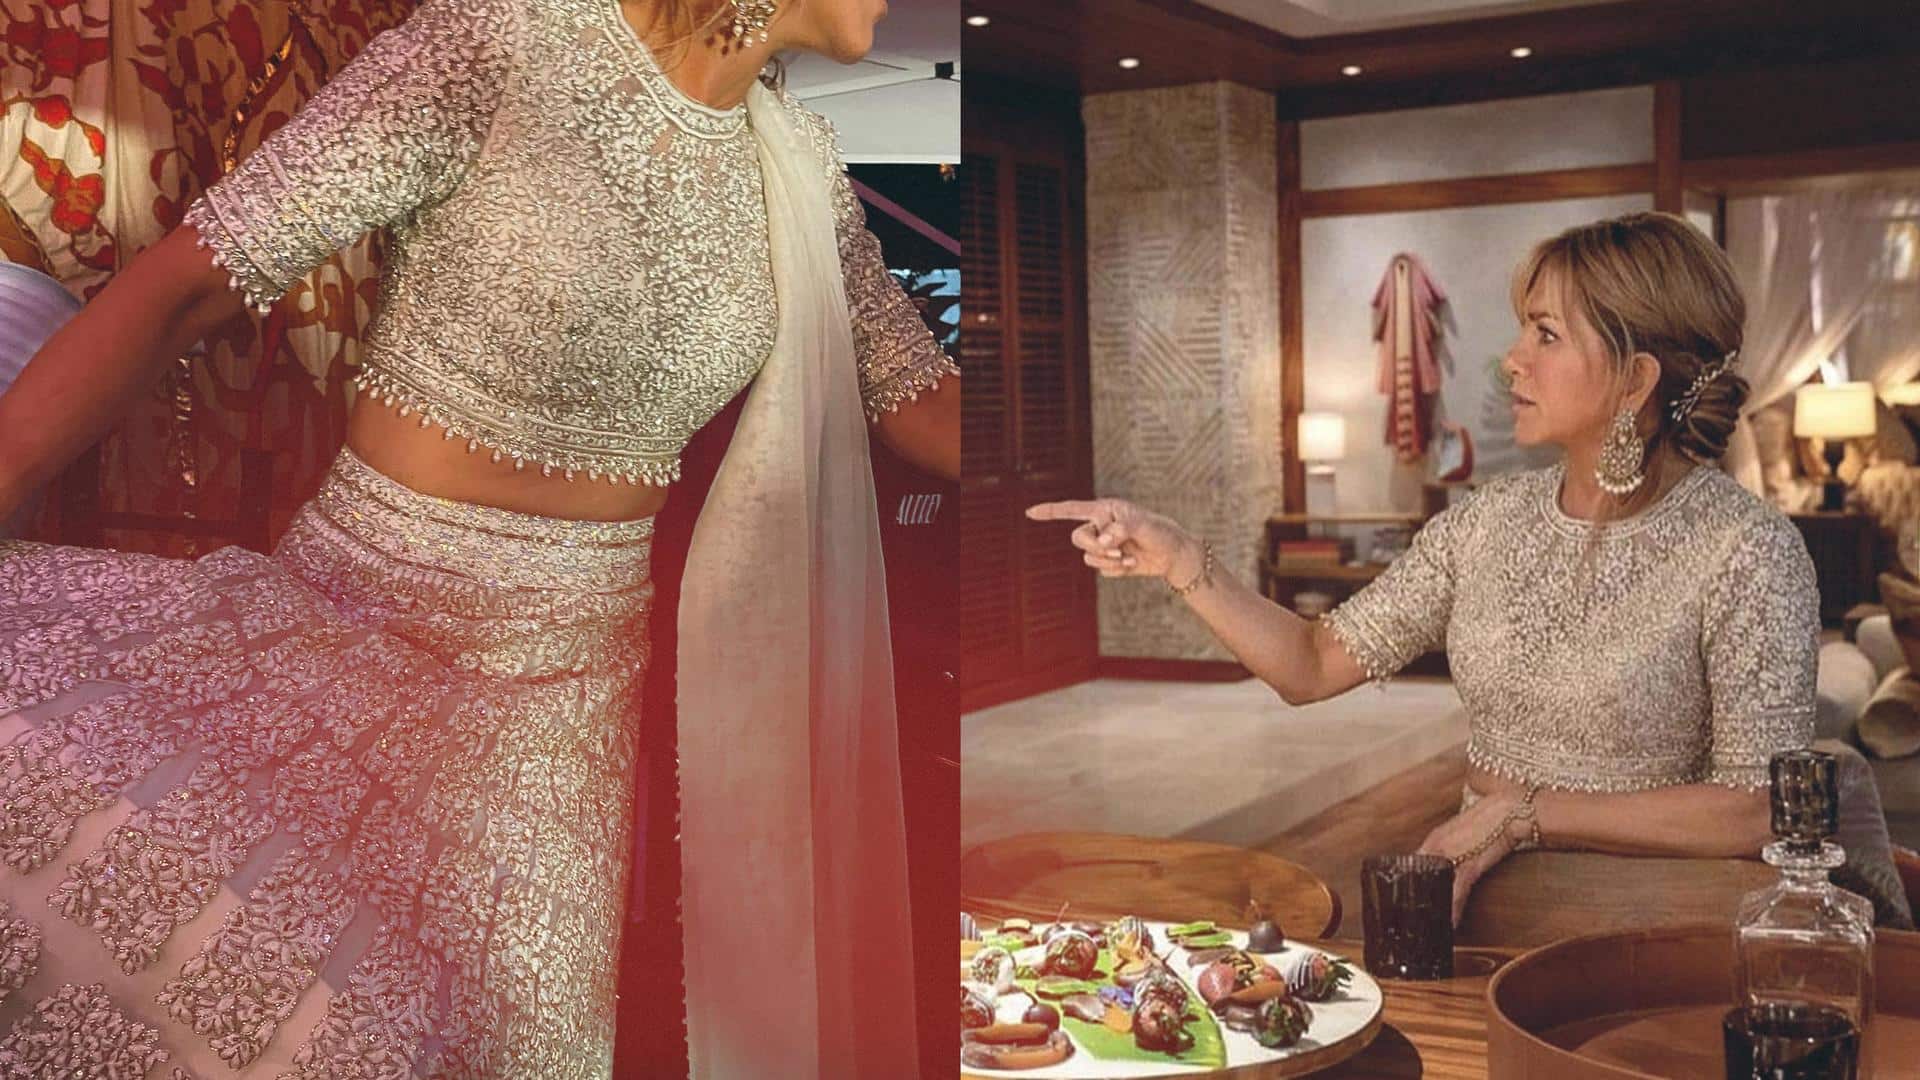 Alanna Panday looks dreamy in Manish Malhotra lehenga on her wedding day ❤️  #AlannaPanday #DesiWedding #DesiWedding #Fashion #Style ... | Instagram